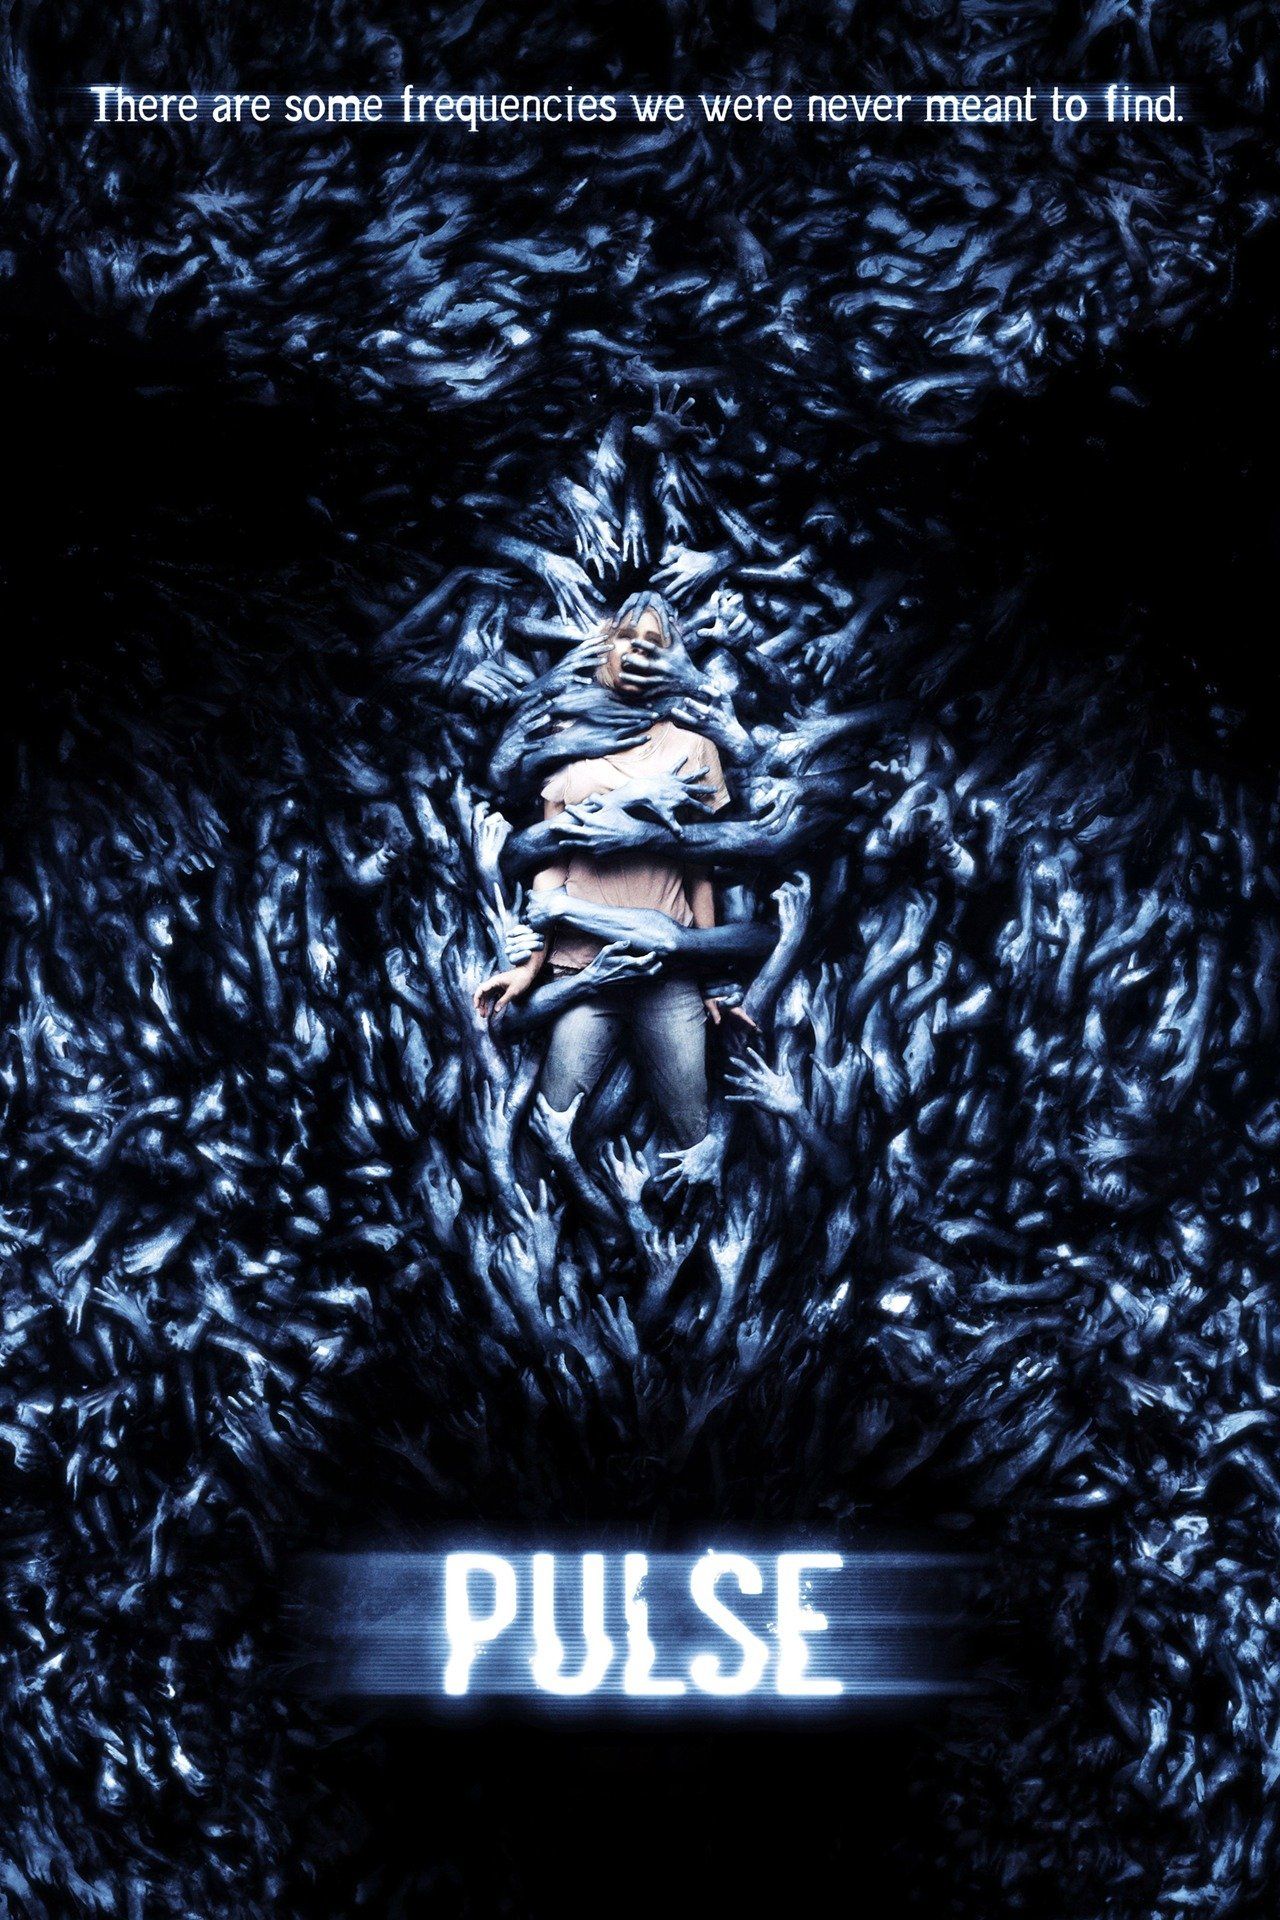 Watch Pulse (2001) Full Movie Free Online - Plex